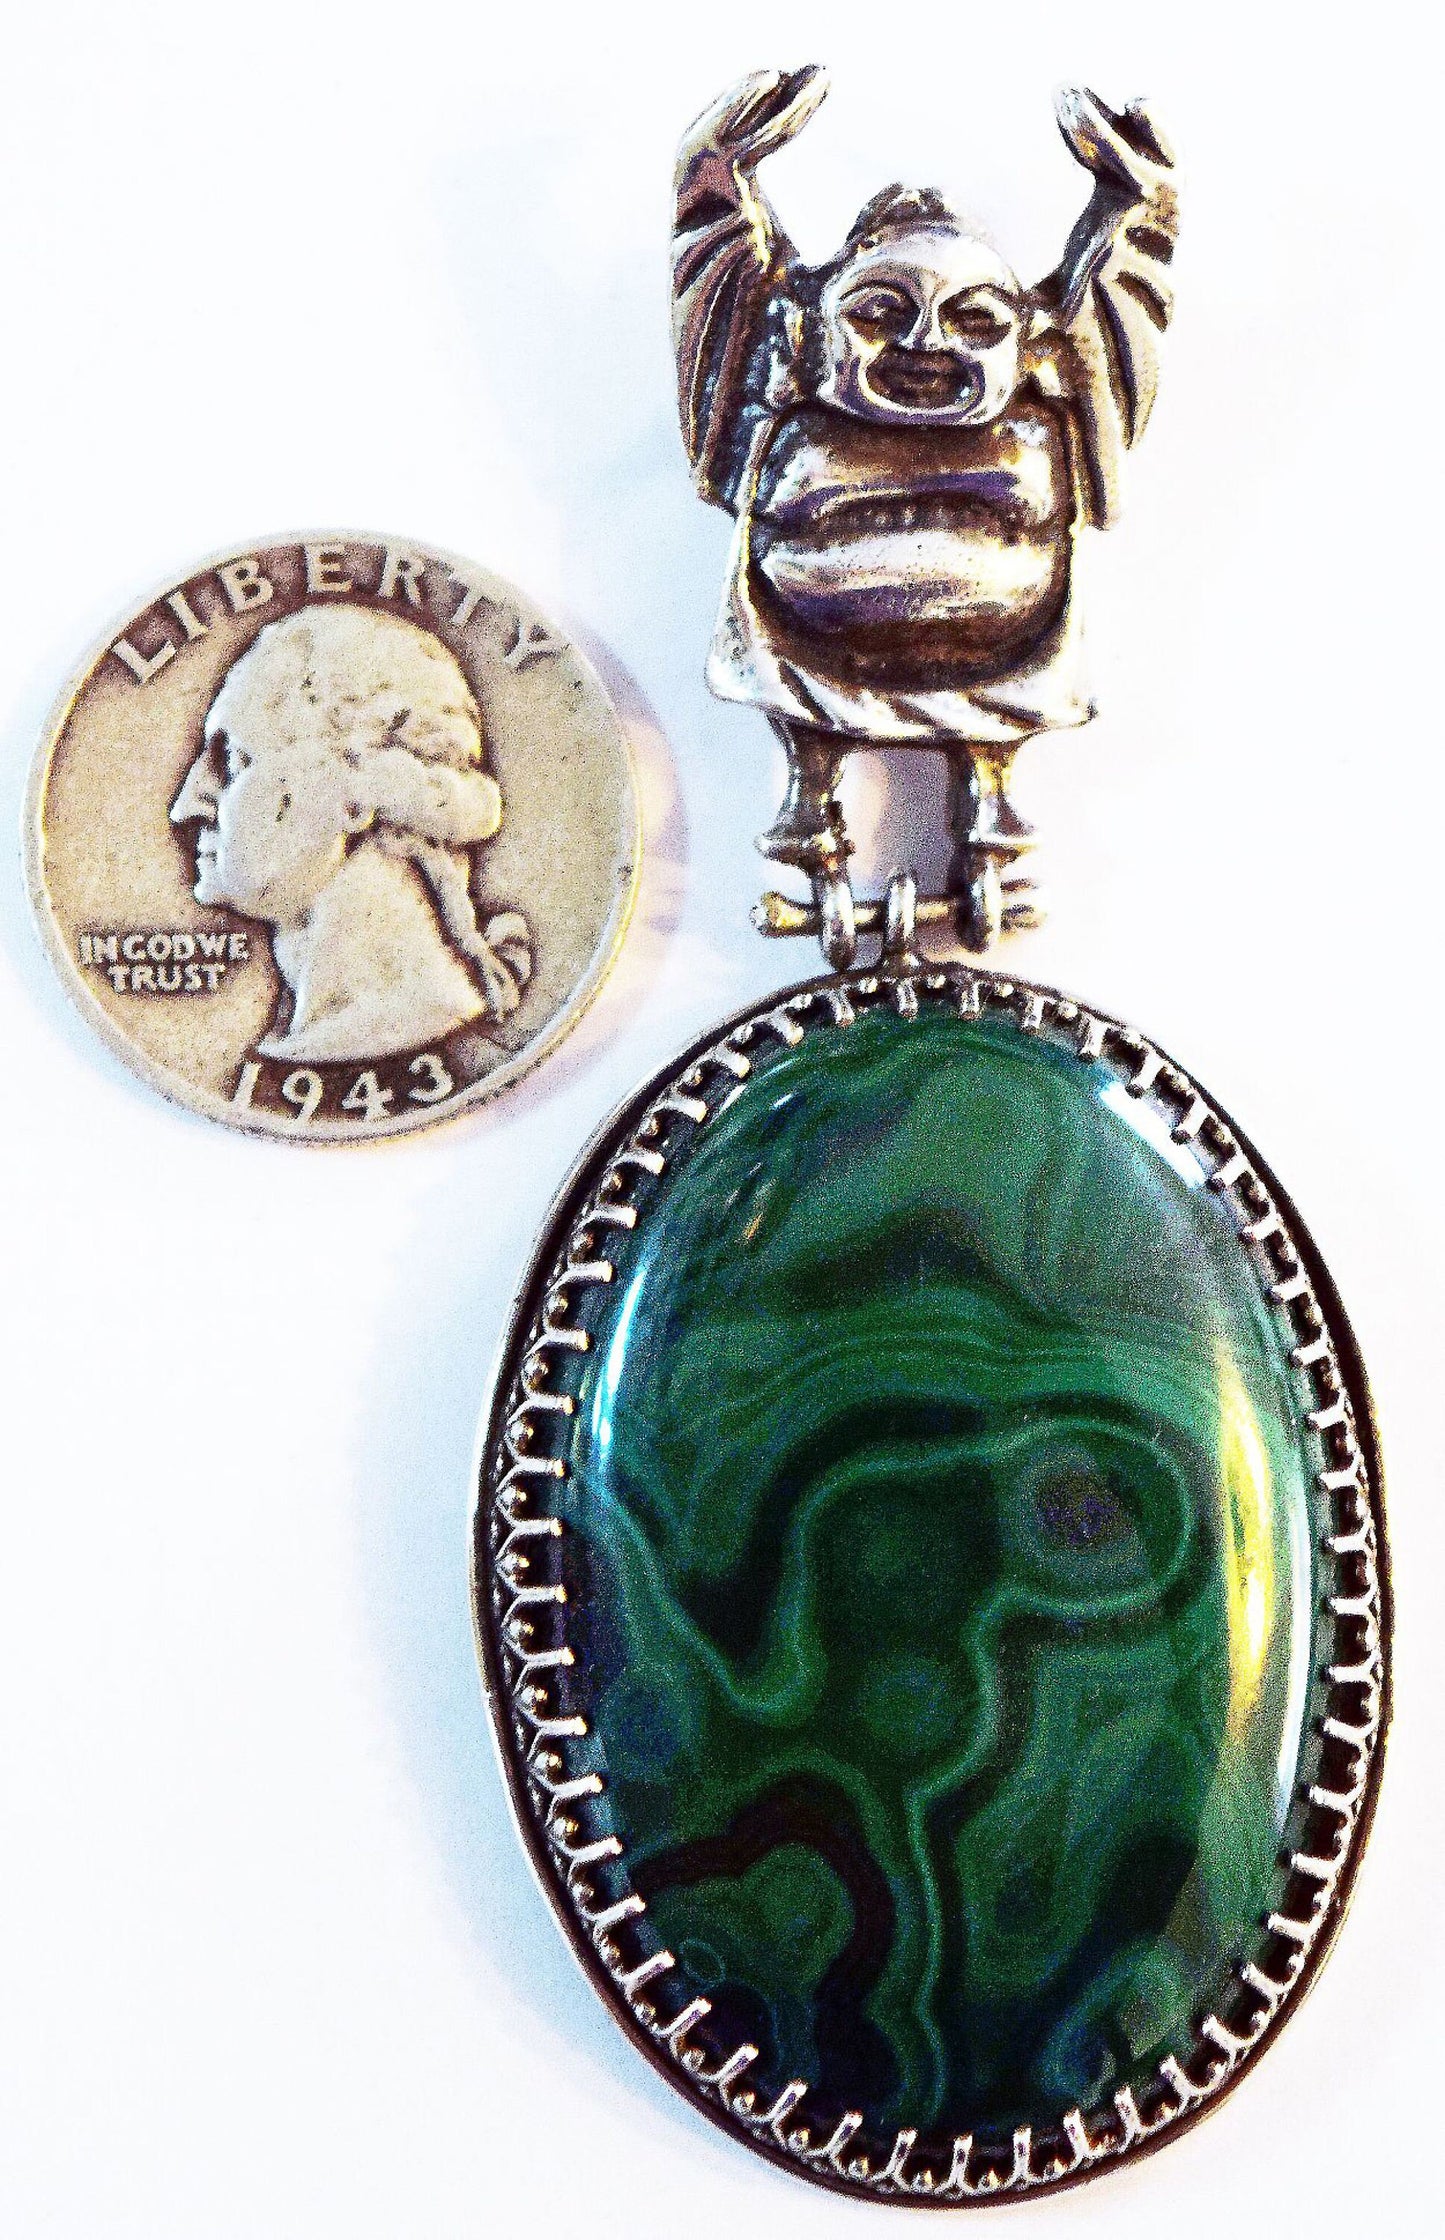 STUNNING Malachite pendant with Ho-Tai Buddha in Sterling Silver